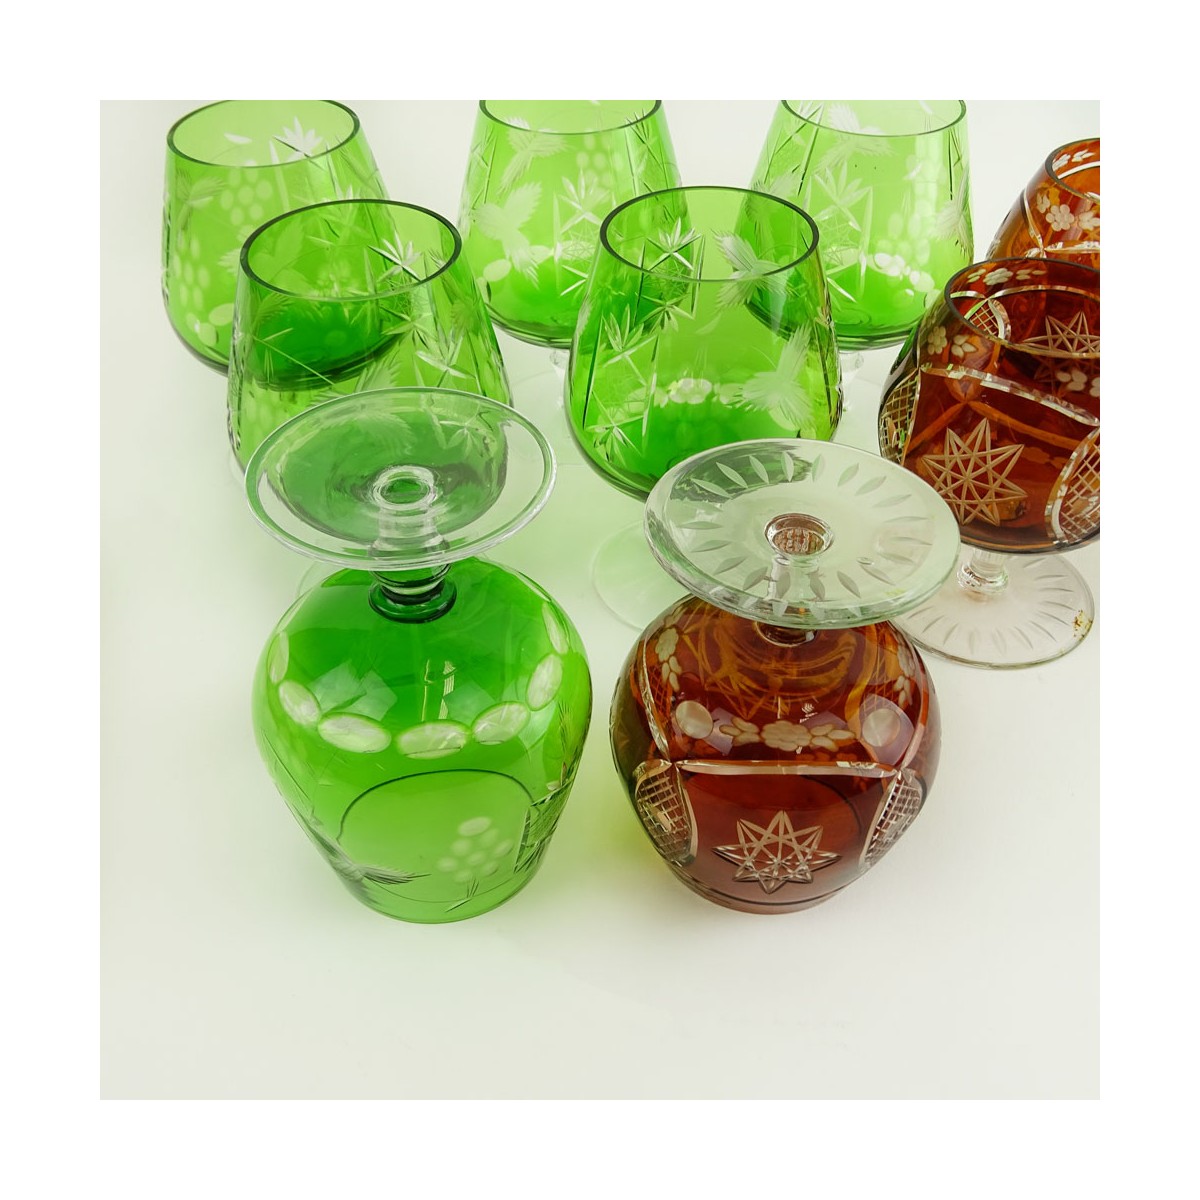 Lot of 9 Bohemian Cut Glass Brandy glasses in Green and Deep Orange. Various stems. Measure 4-1/2" 